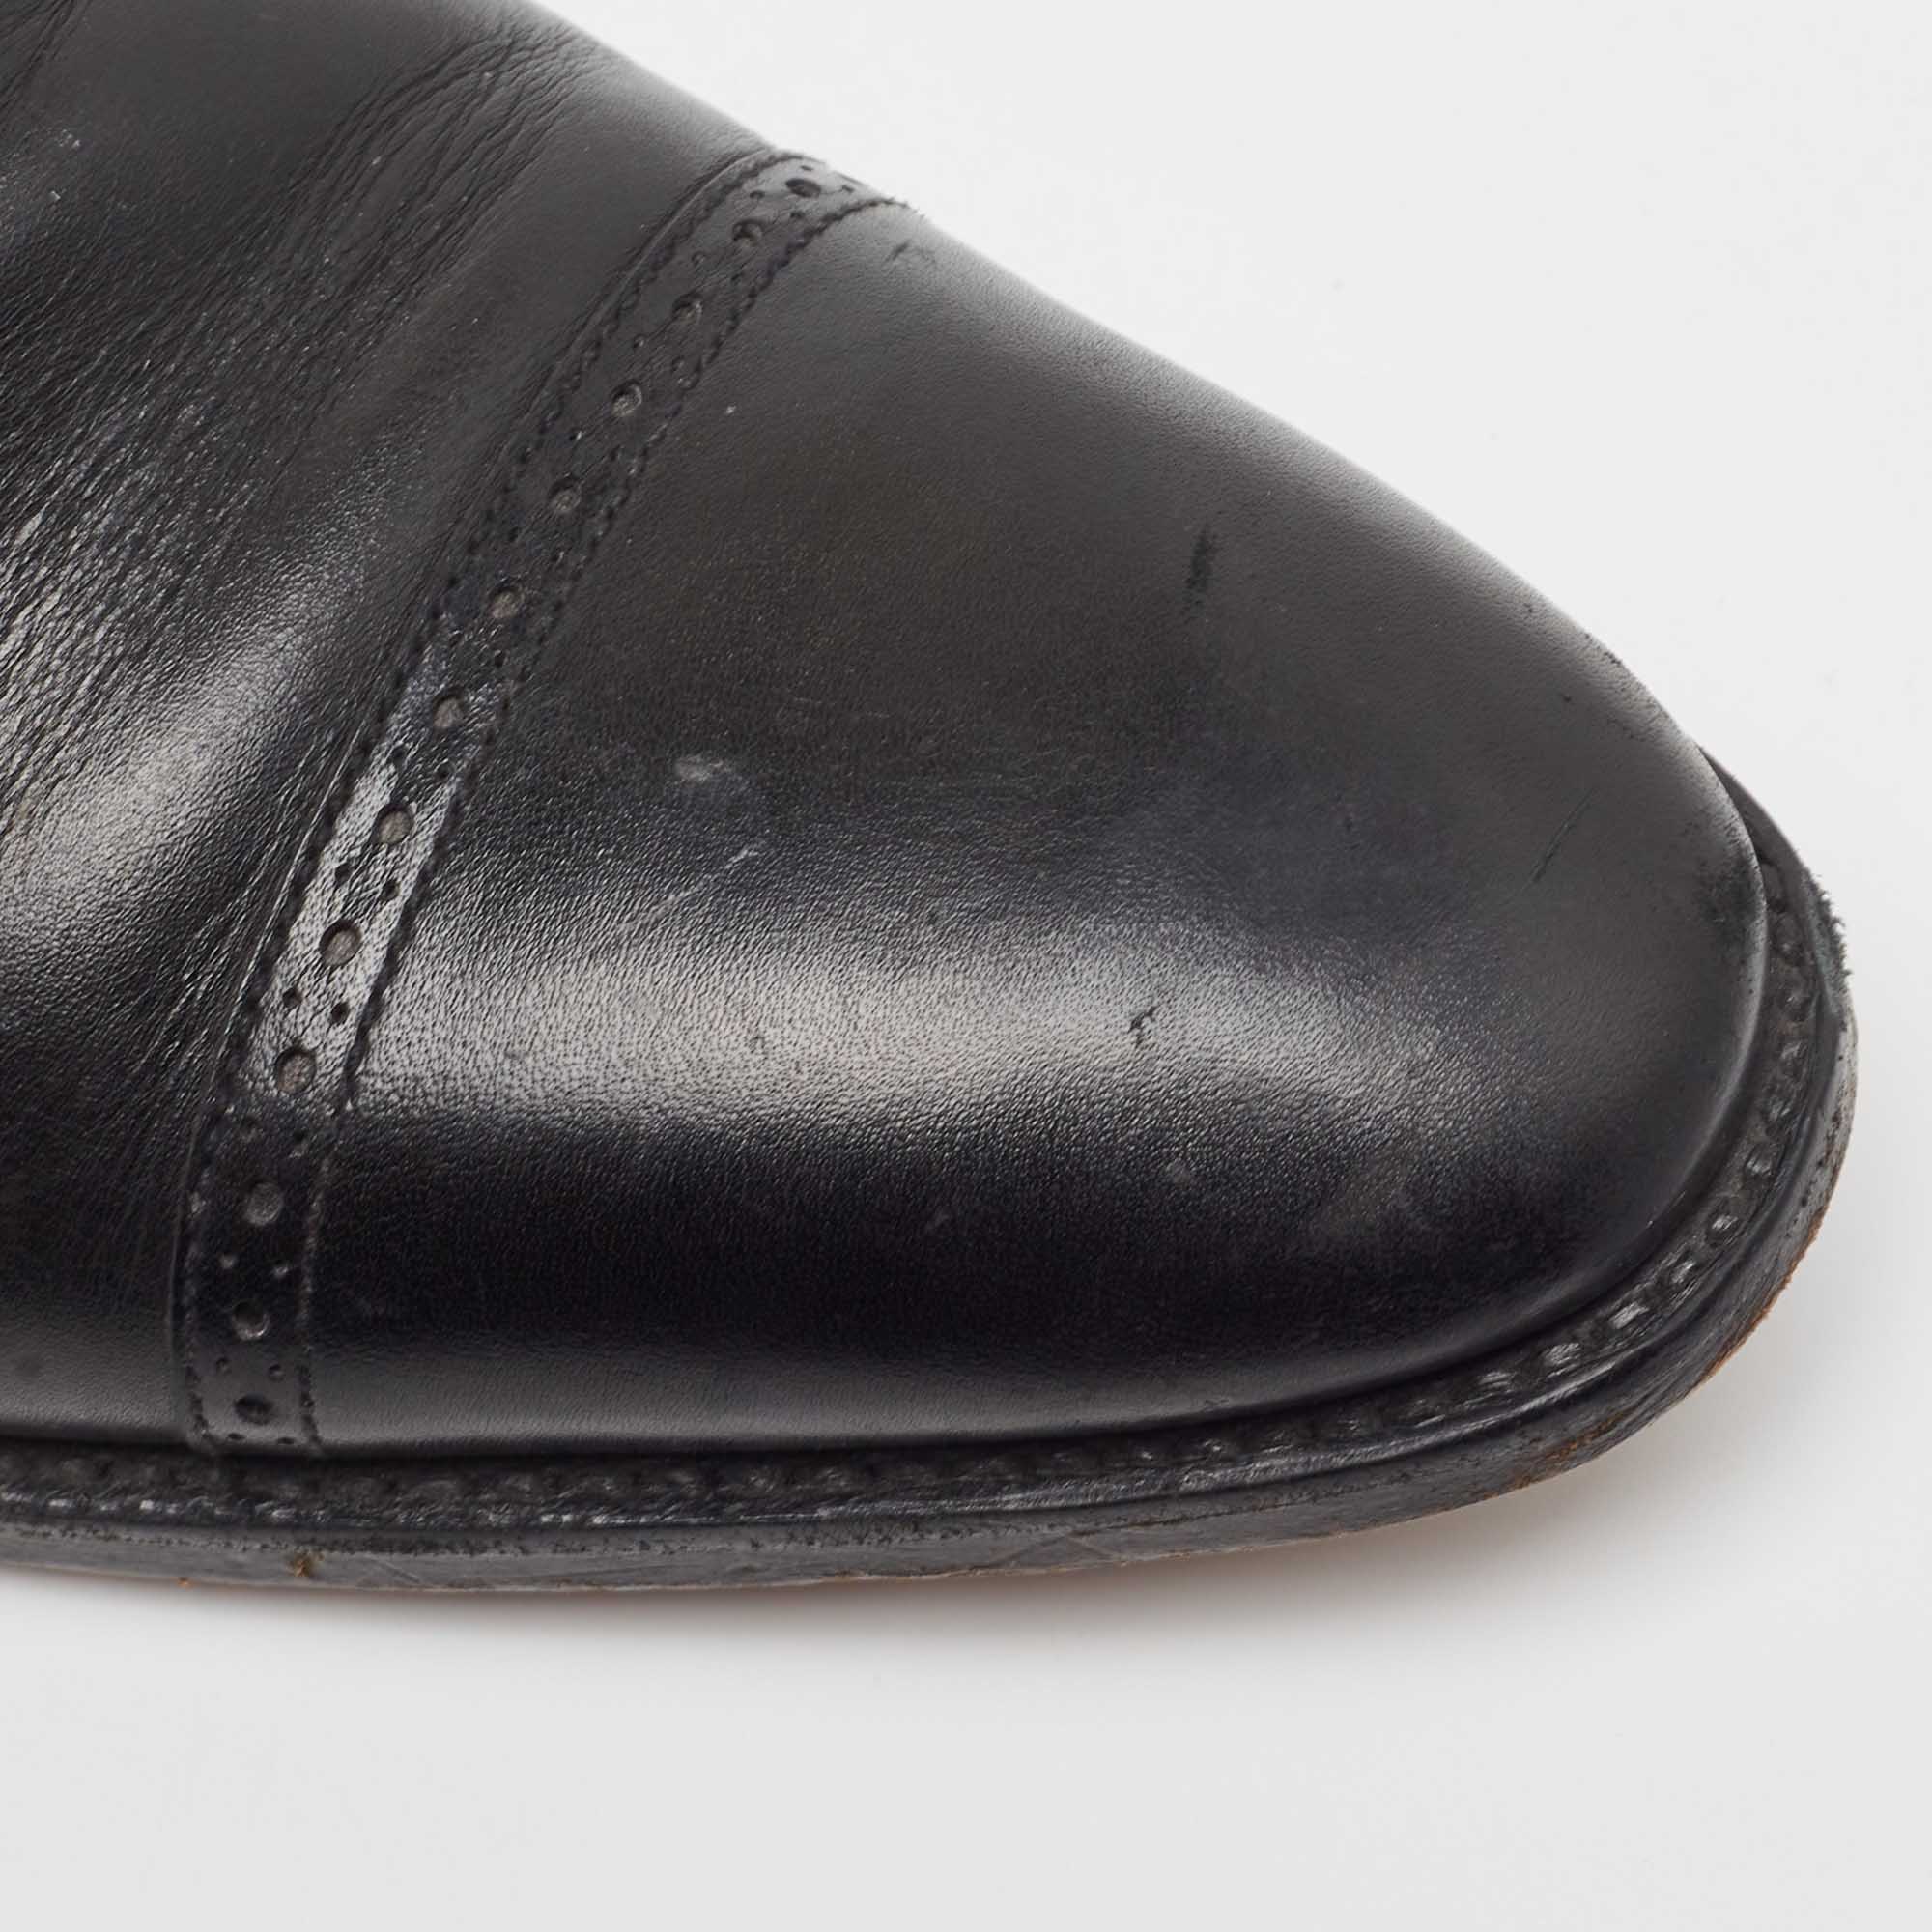 Prada Black Leather Lace Up Oxfords Size 43